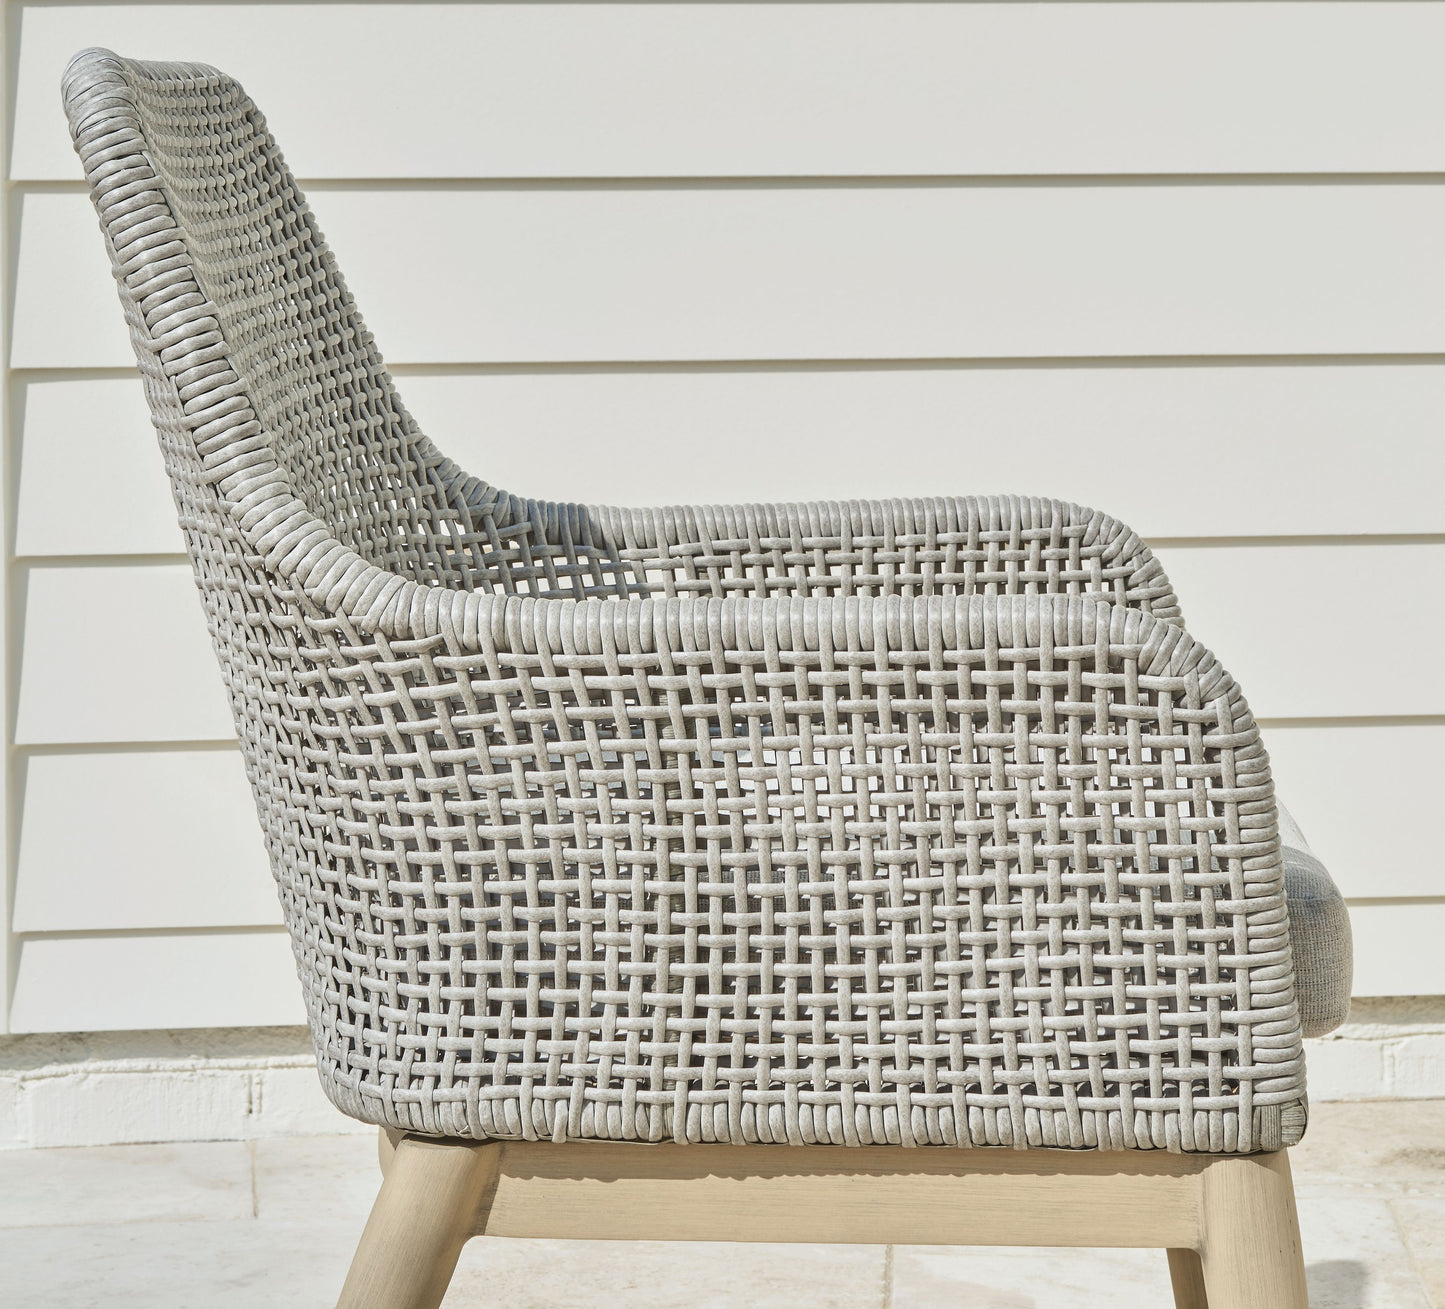 Seton Creek - Gray - Arm Chair With Cushion (Set of 2)